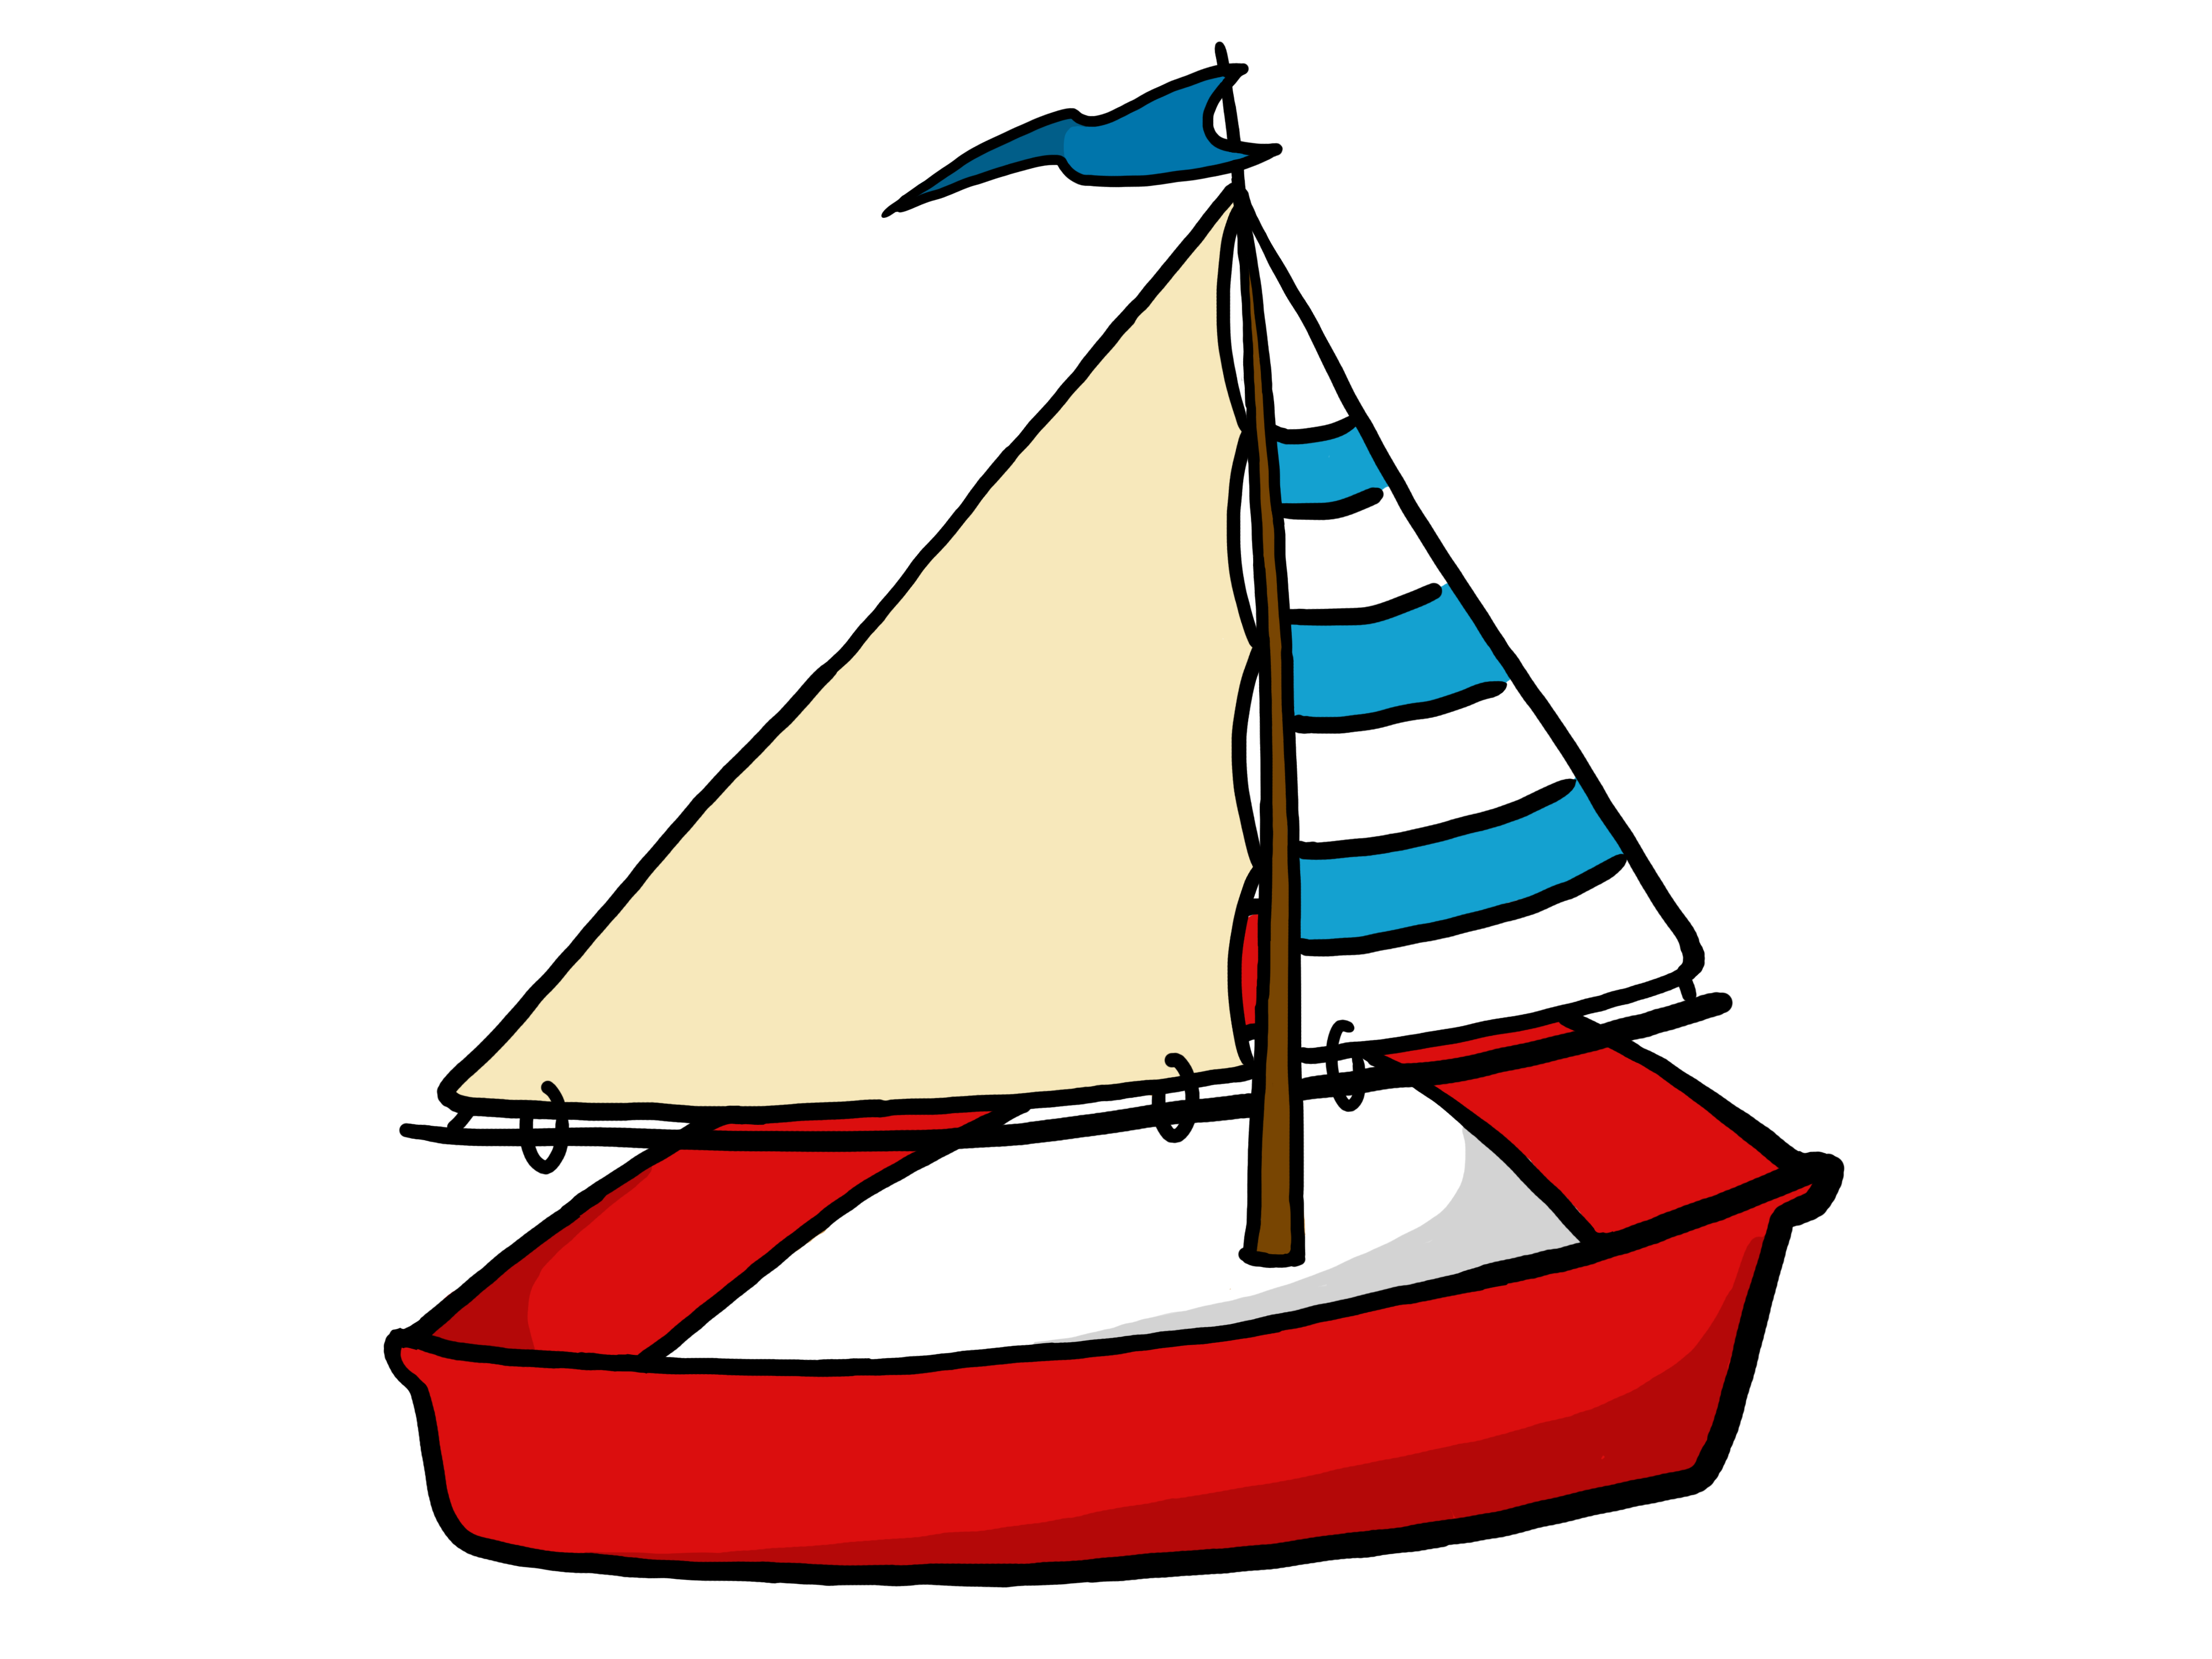 Clip art of boat clipart imag